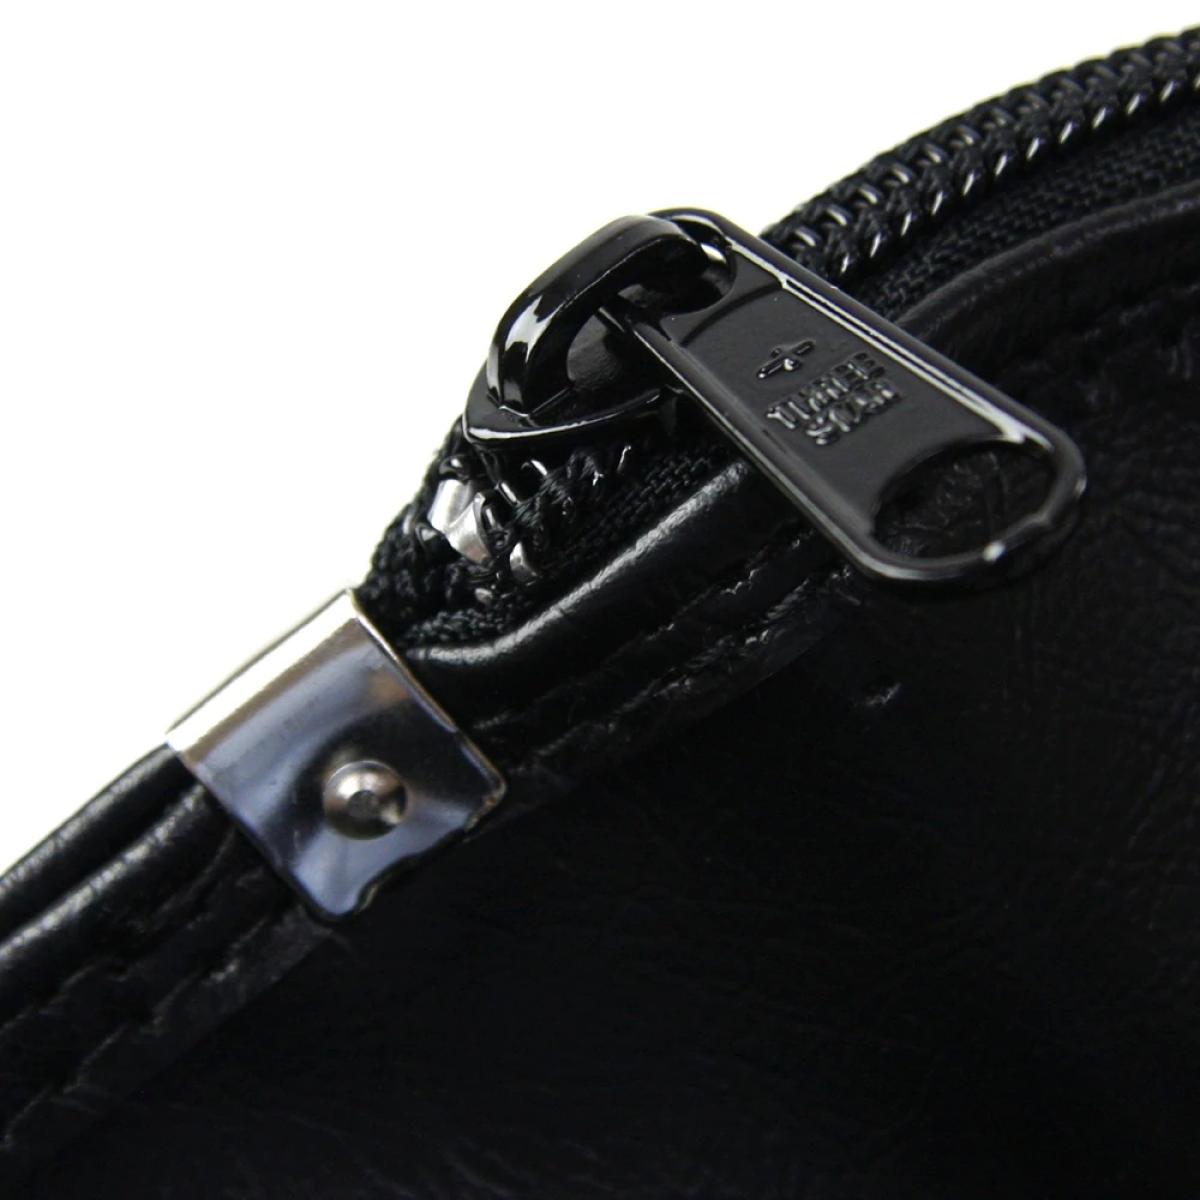 Bokken & Jo weapon bag synthetic leather black ➤ www.bokken-shop.de. Suitable for Aikido, Bujinkan, Kendo, Ju Jutsu, Iaito. Your Budo dealer!